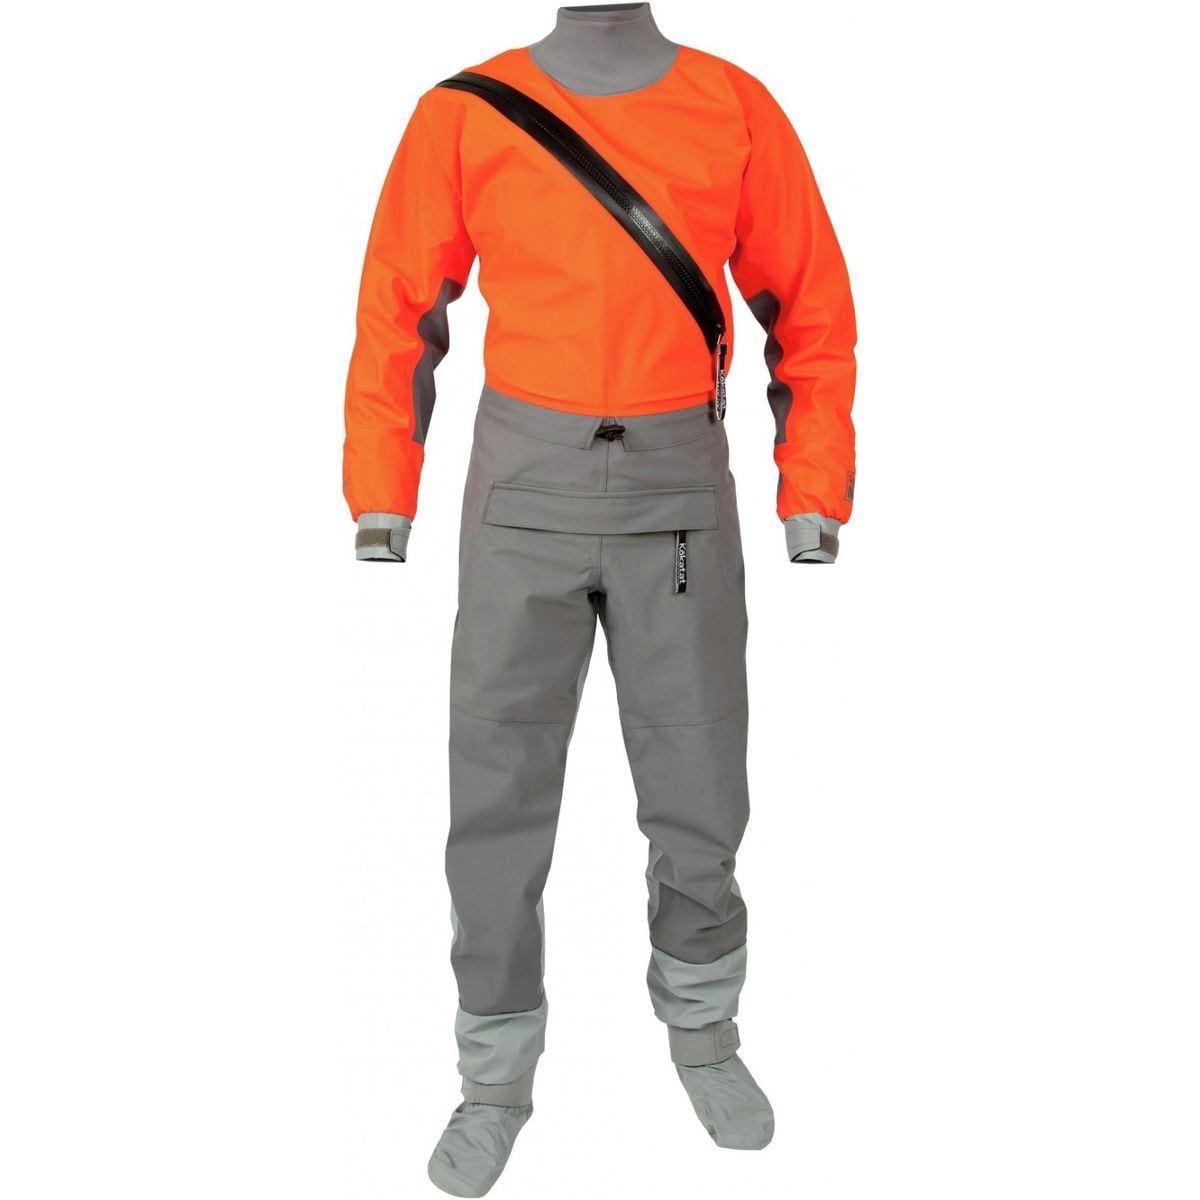 Kokatat Hydrus 3.0 SuperNova Angler Semi-Dry Paddling Suit - Men's